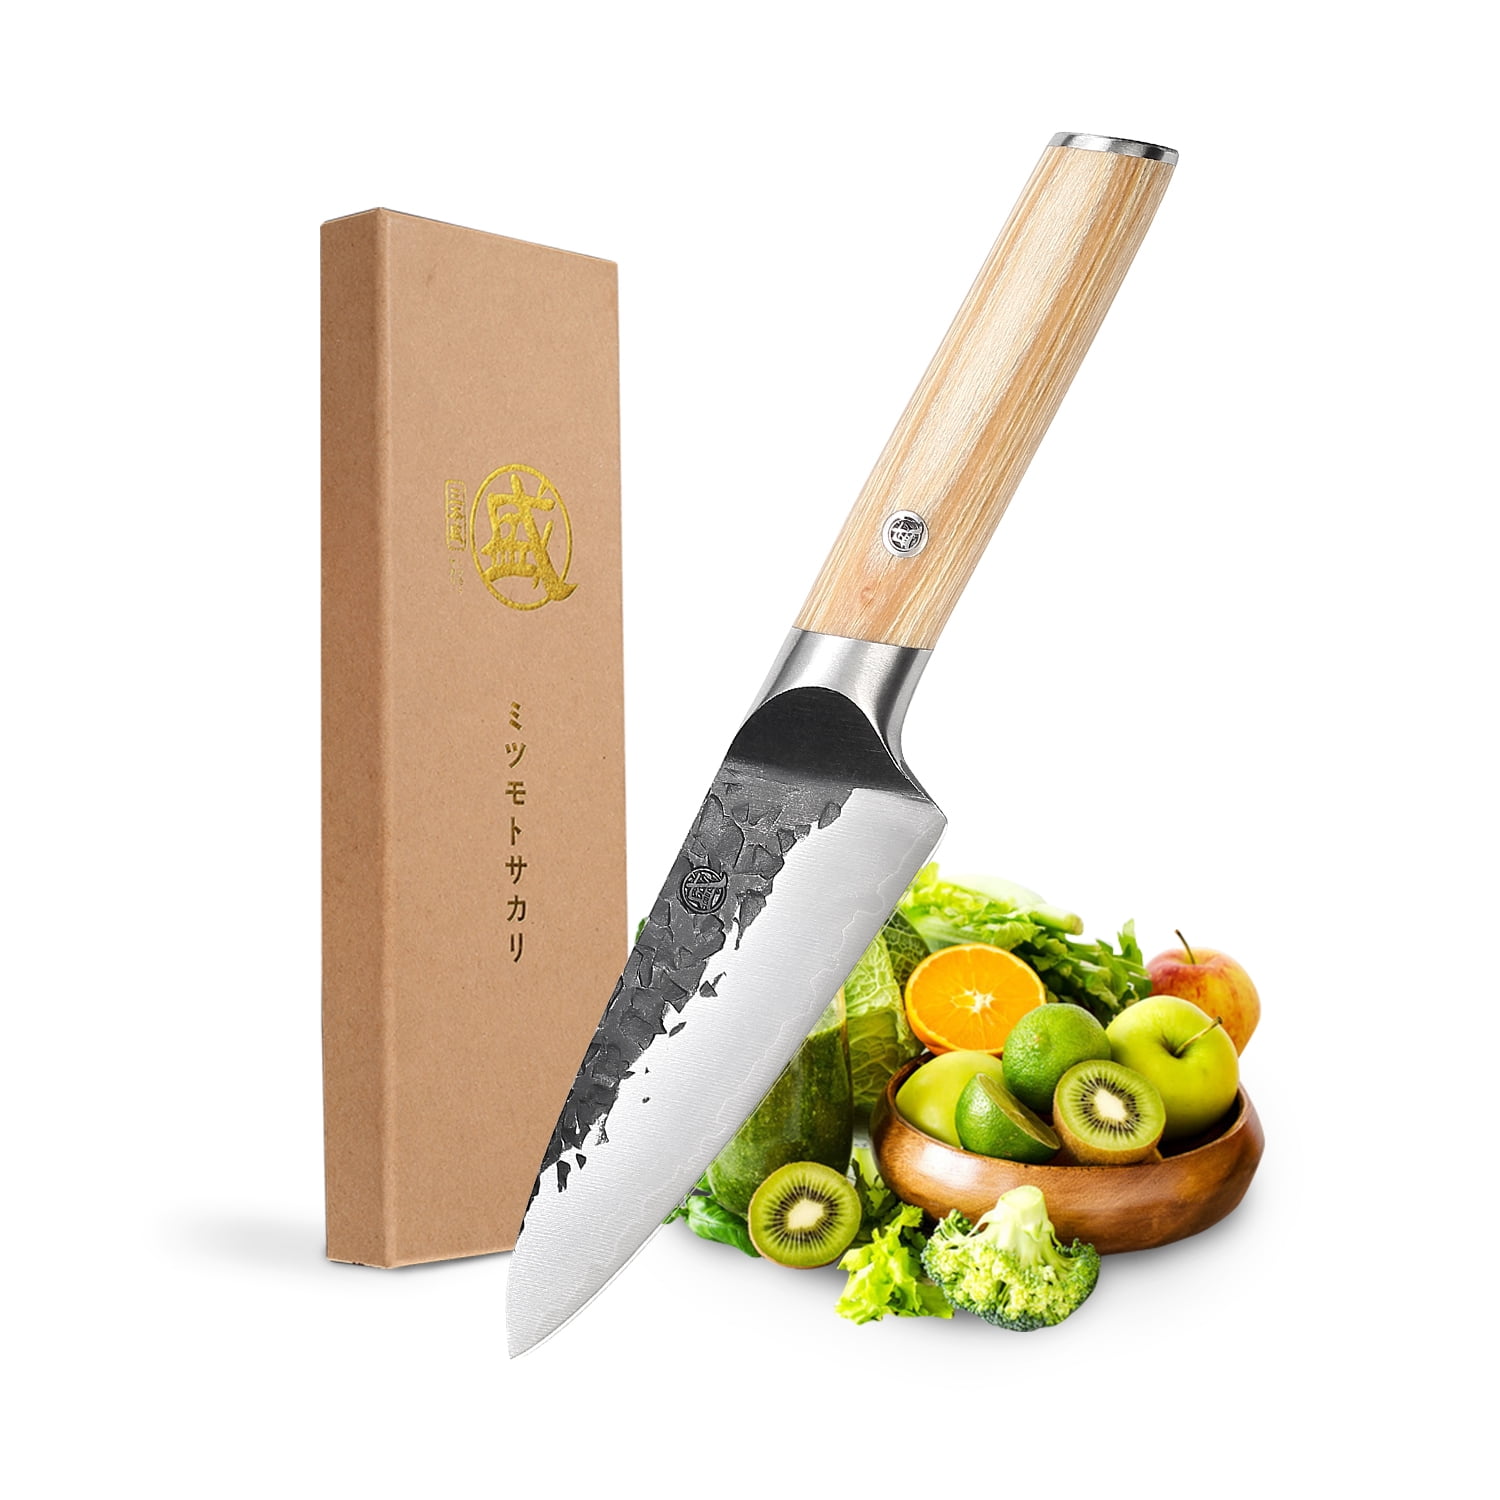 MITSUMOTO SAKARI 7 inch Santoku Cooking Knife, Hand Forged Kitchen Meat  Knife, Professional Japanese Chef Knife (G10 Handle & Gift Box)